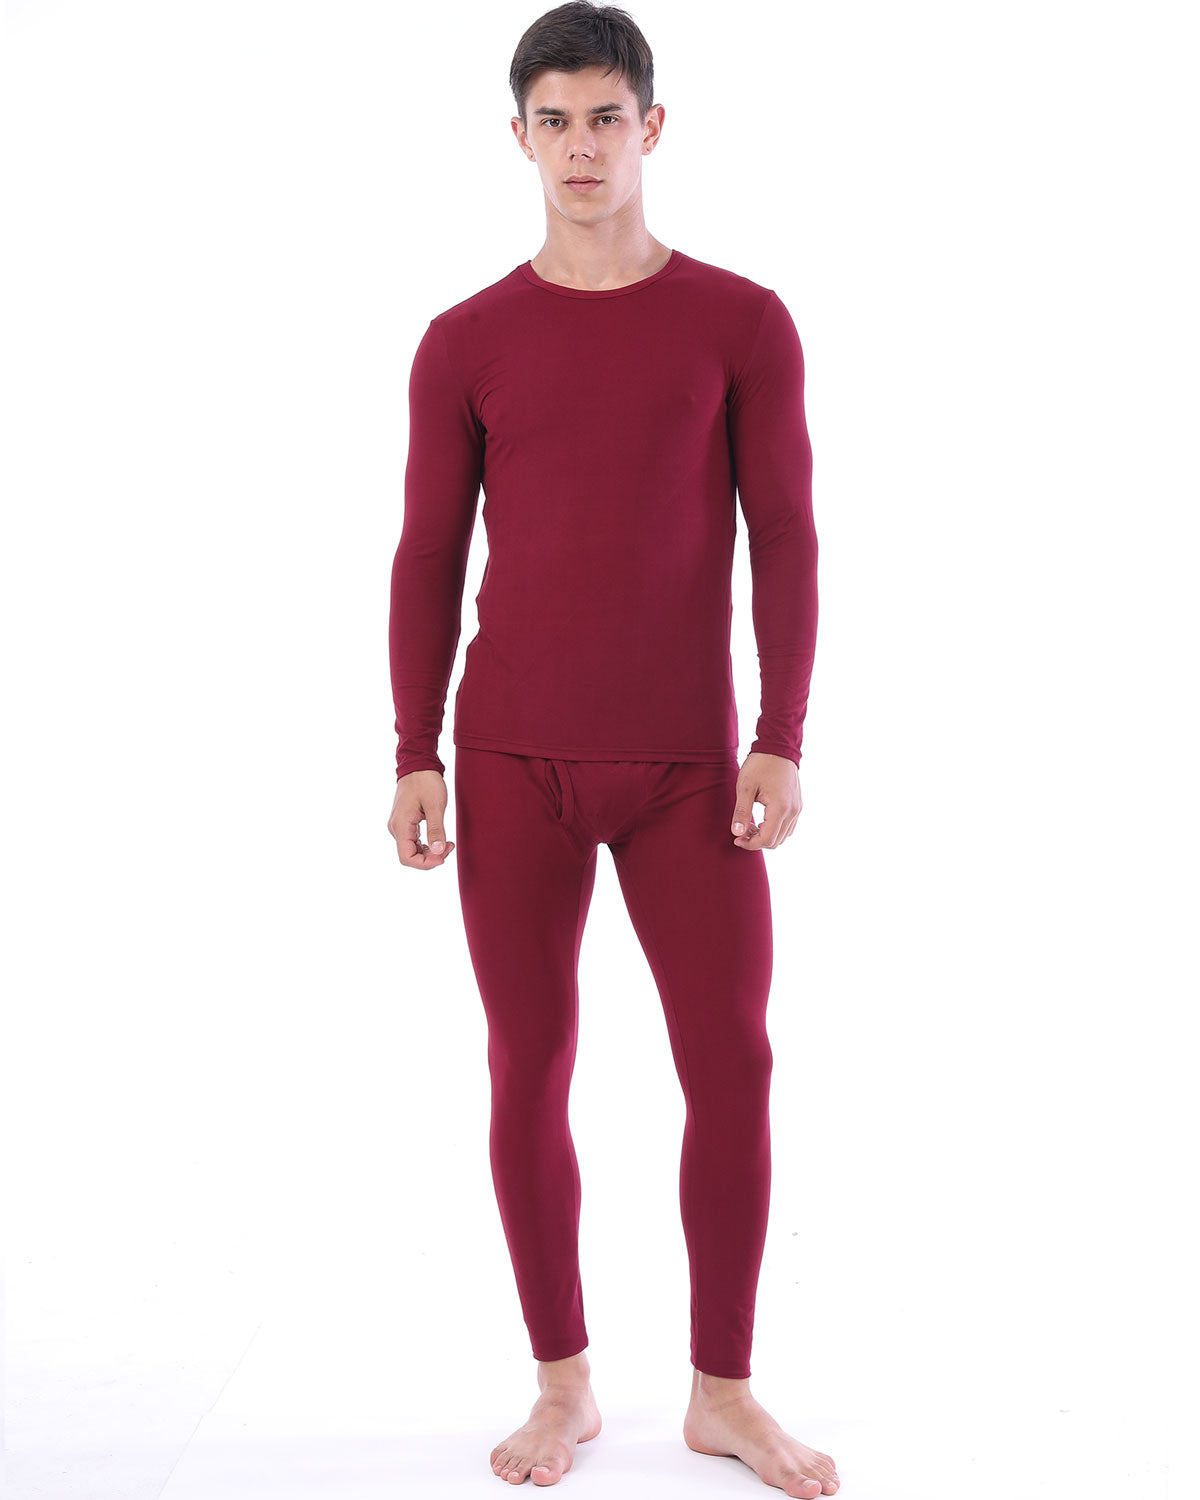 YUSHOW Men Thermal Underwear Set Winter Top & Bottom Ultra Soft Male Long John Set Size 2X-Large